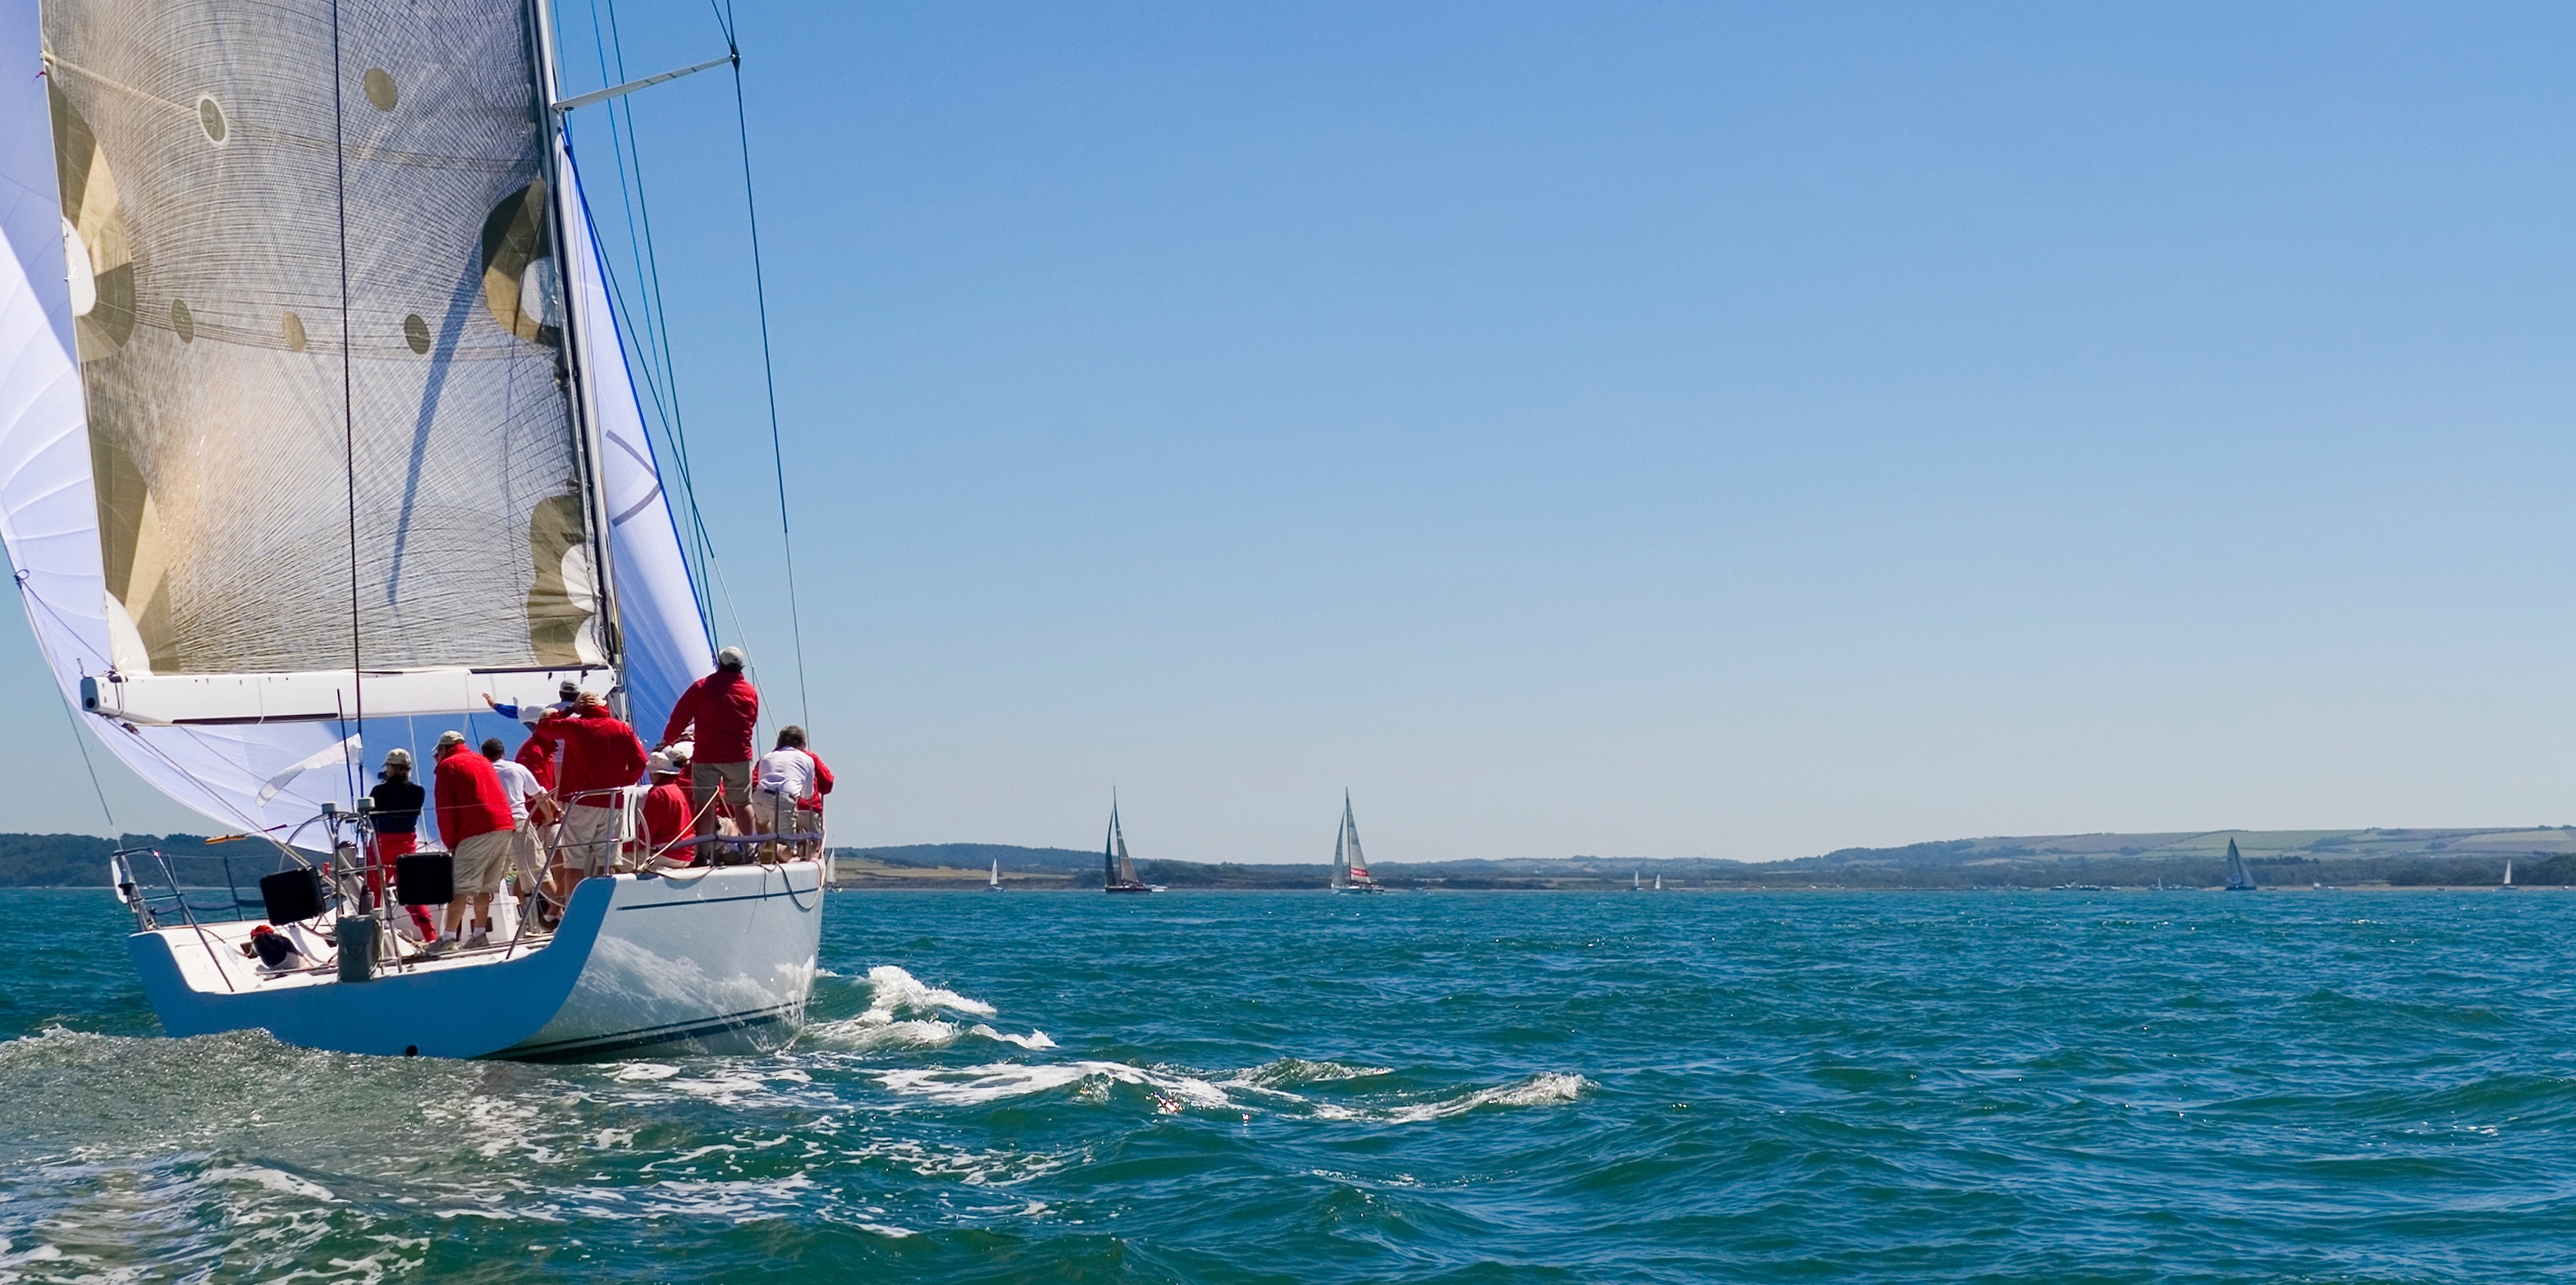 A fully crewed racing yacht sailing